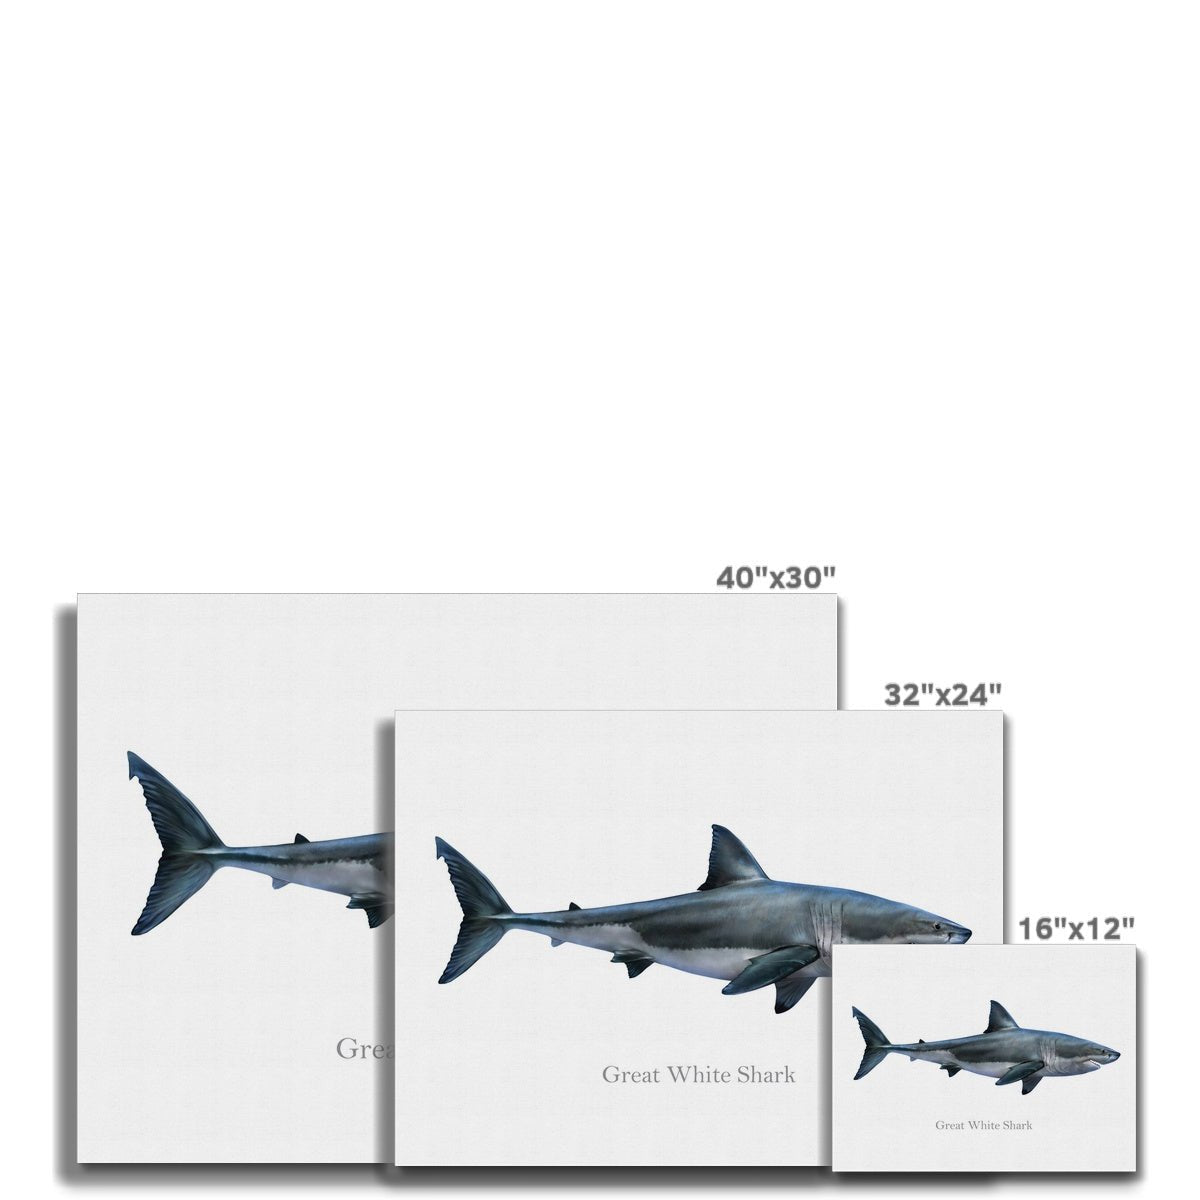 Great White Shark - Canvas Print - madfishlab.com